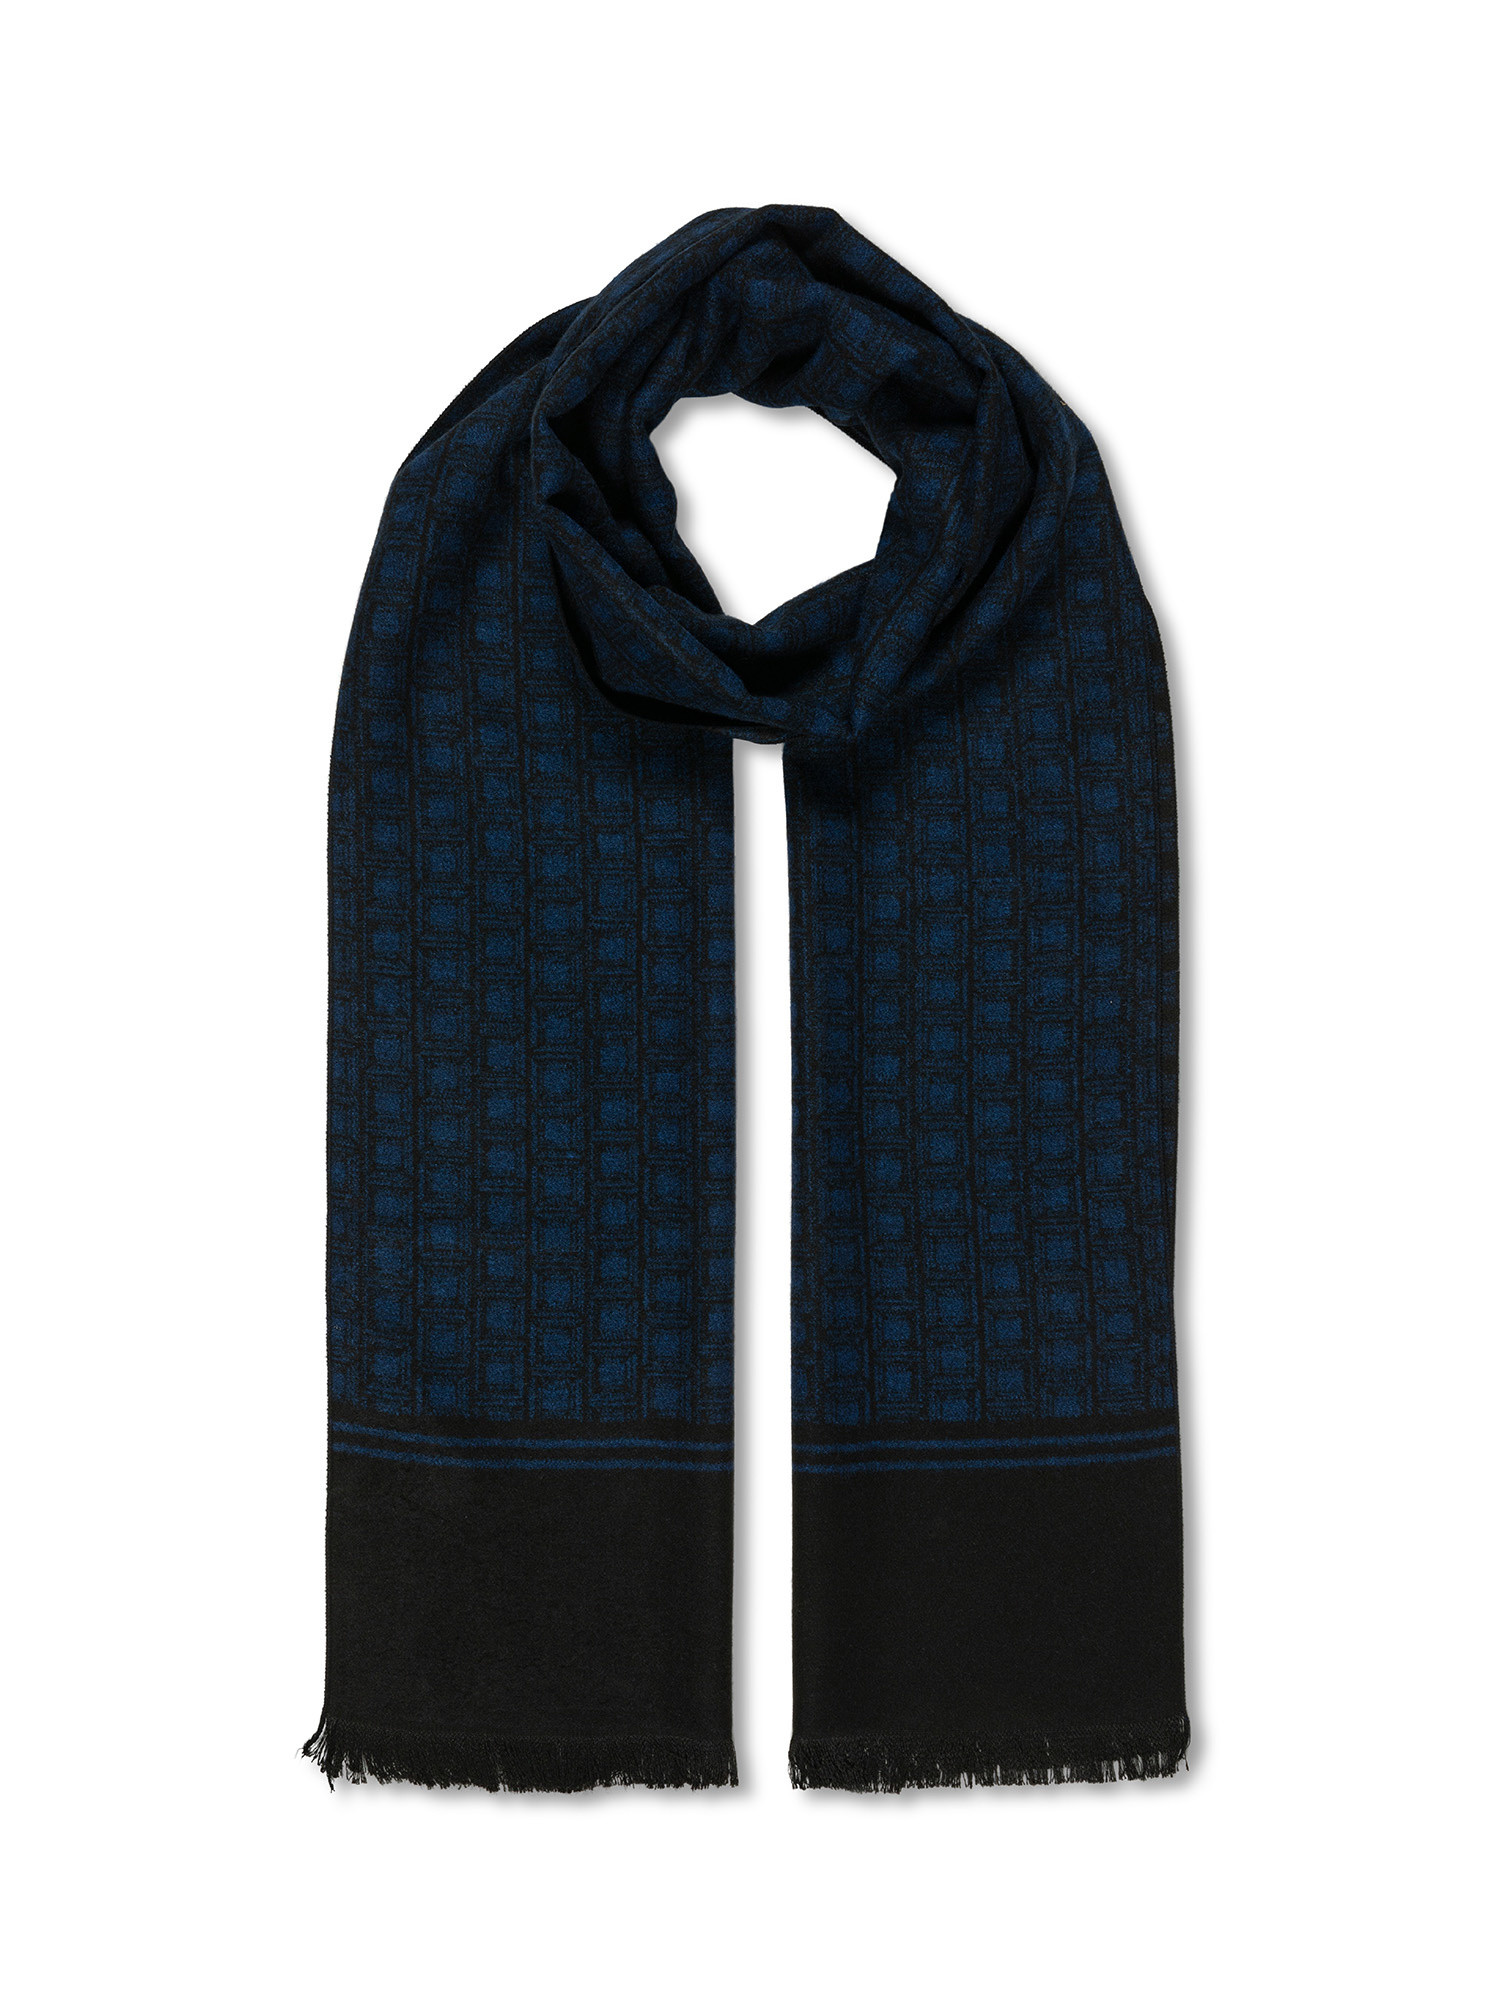 Luca D'Altieri - Patterned scarf, Dark Blue, large image number 0